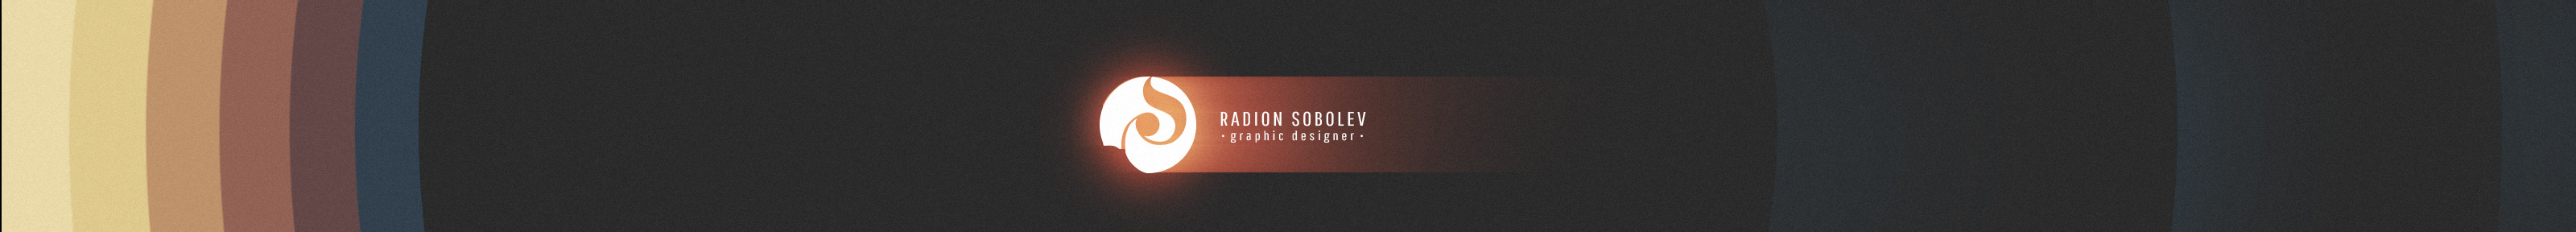 Radion Sobolev's profile banner